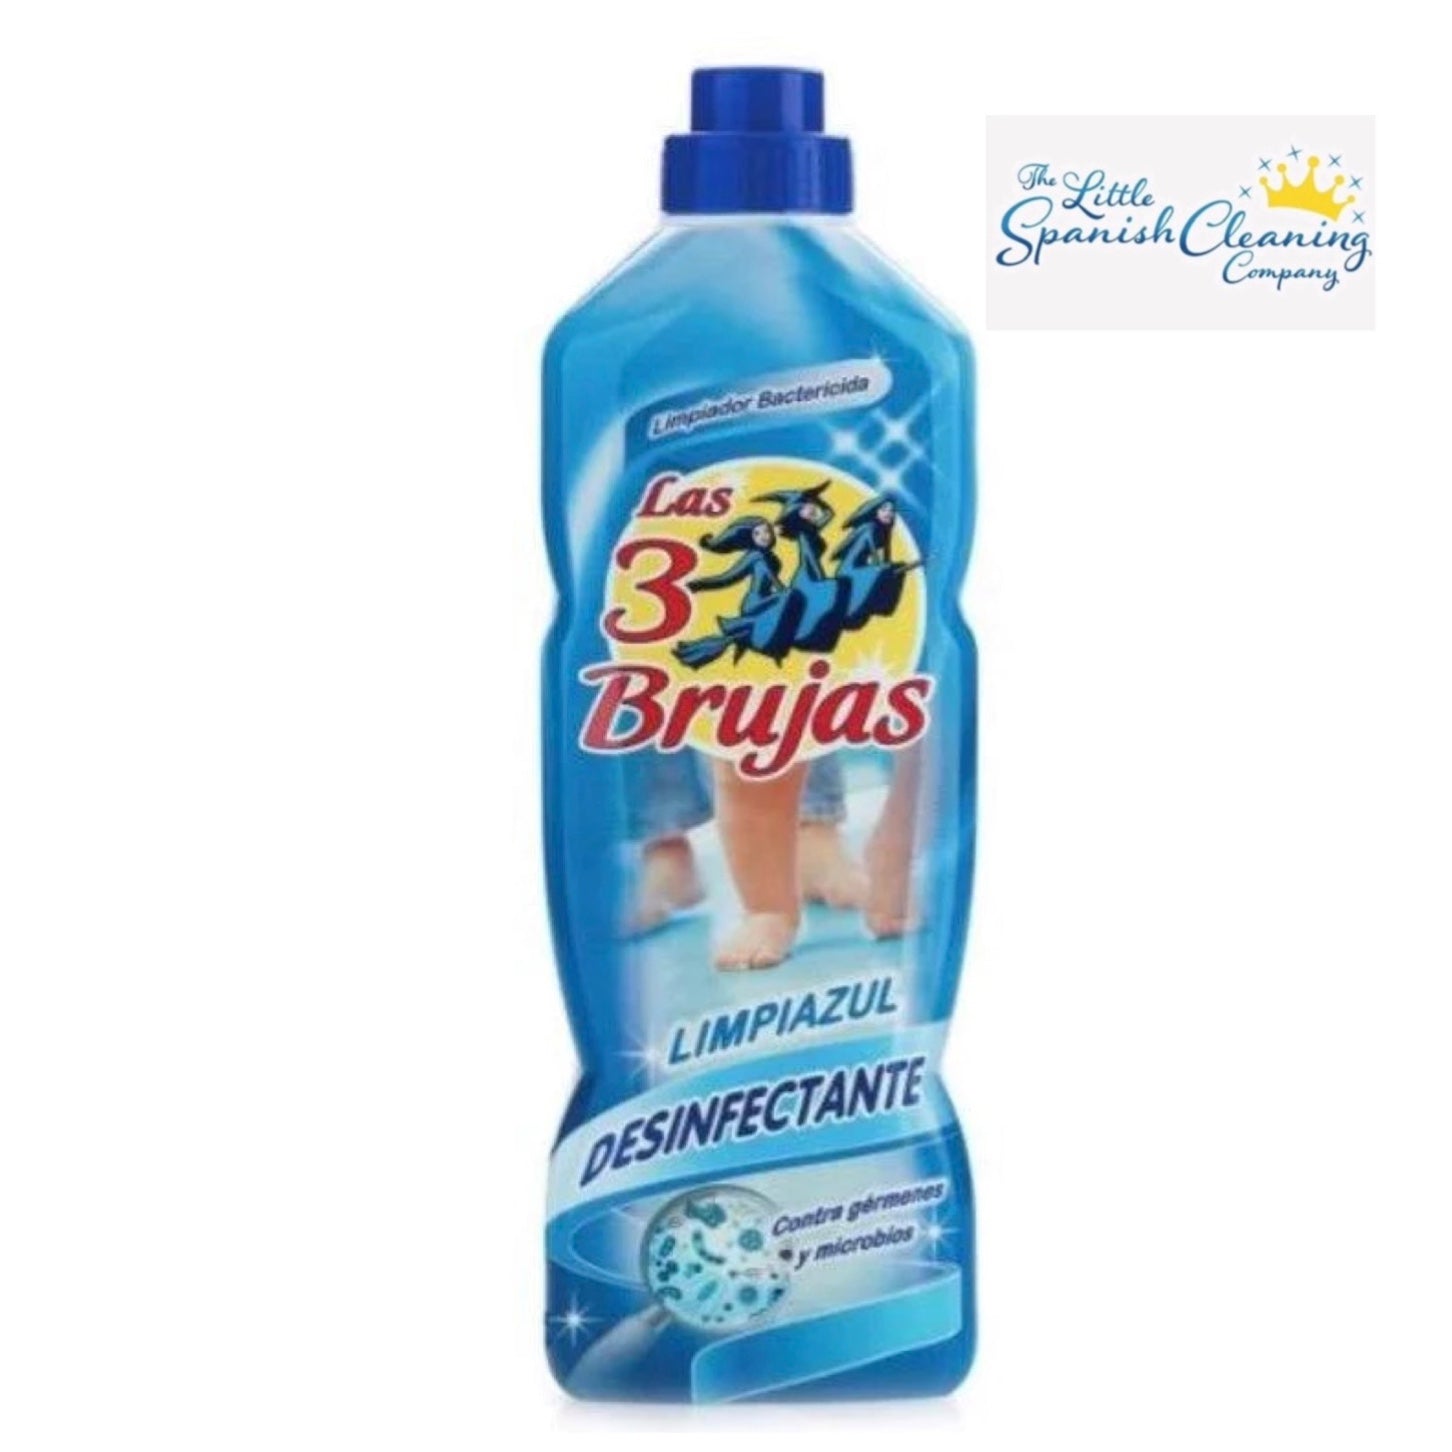 Brumol Azul 🫧 makes your hob sparkle #thecleaninghubltd #brumol